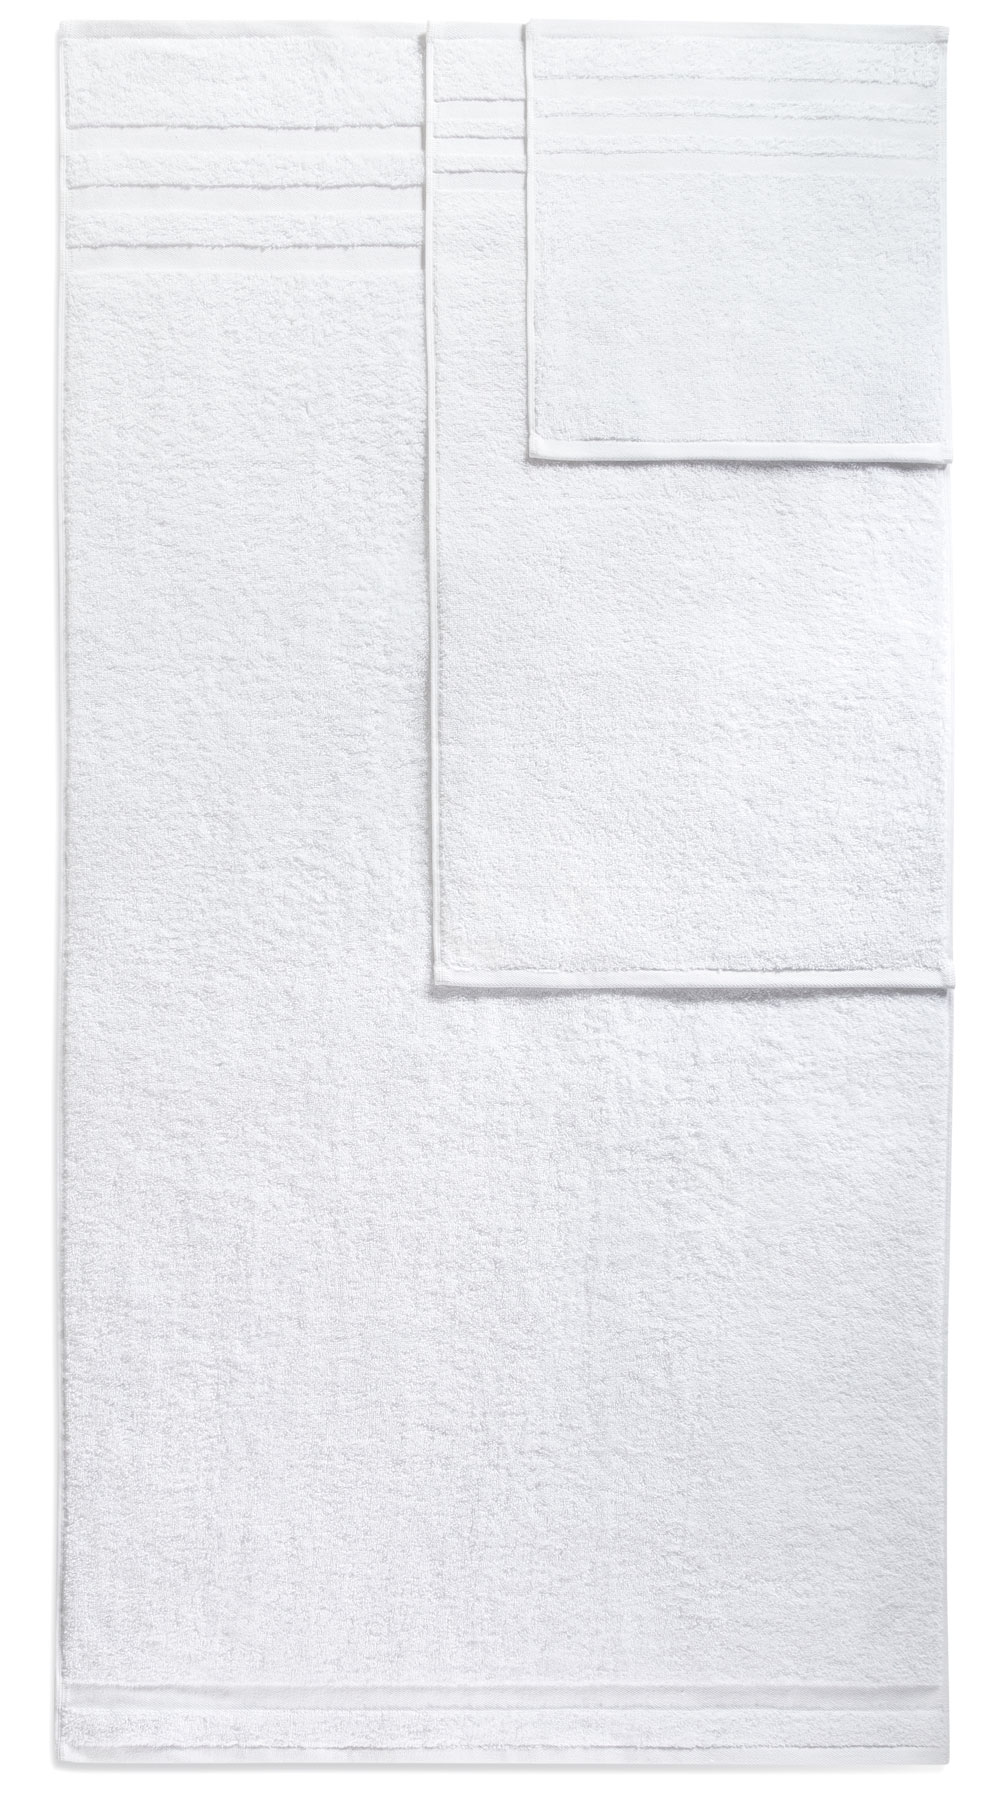 100% Turkish Cotton White 8 Piece Towel Set-Robemart.com